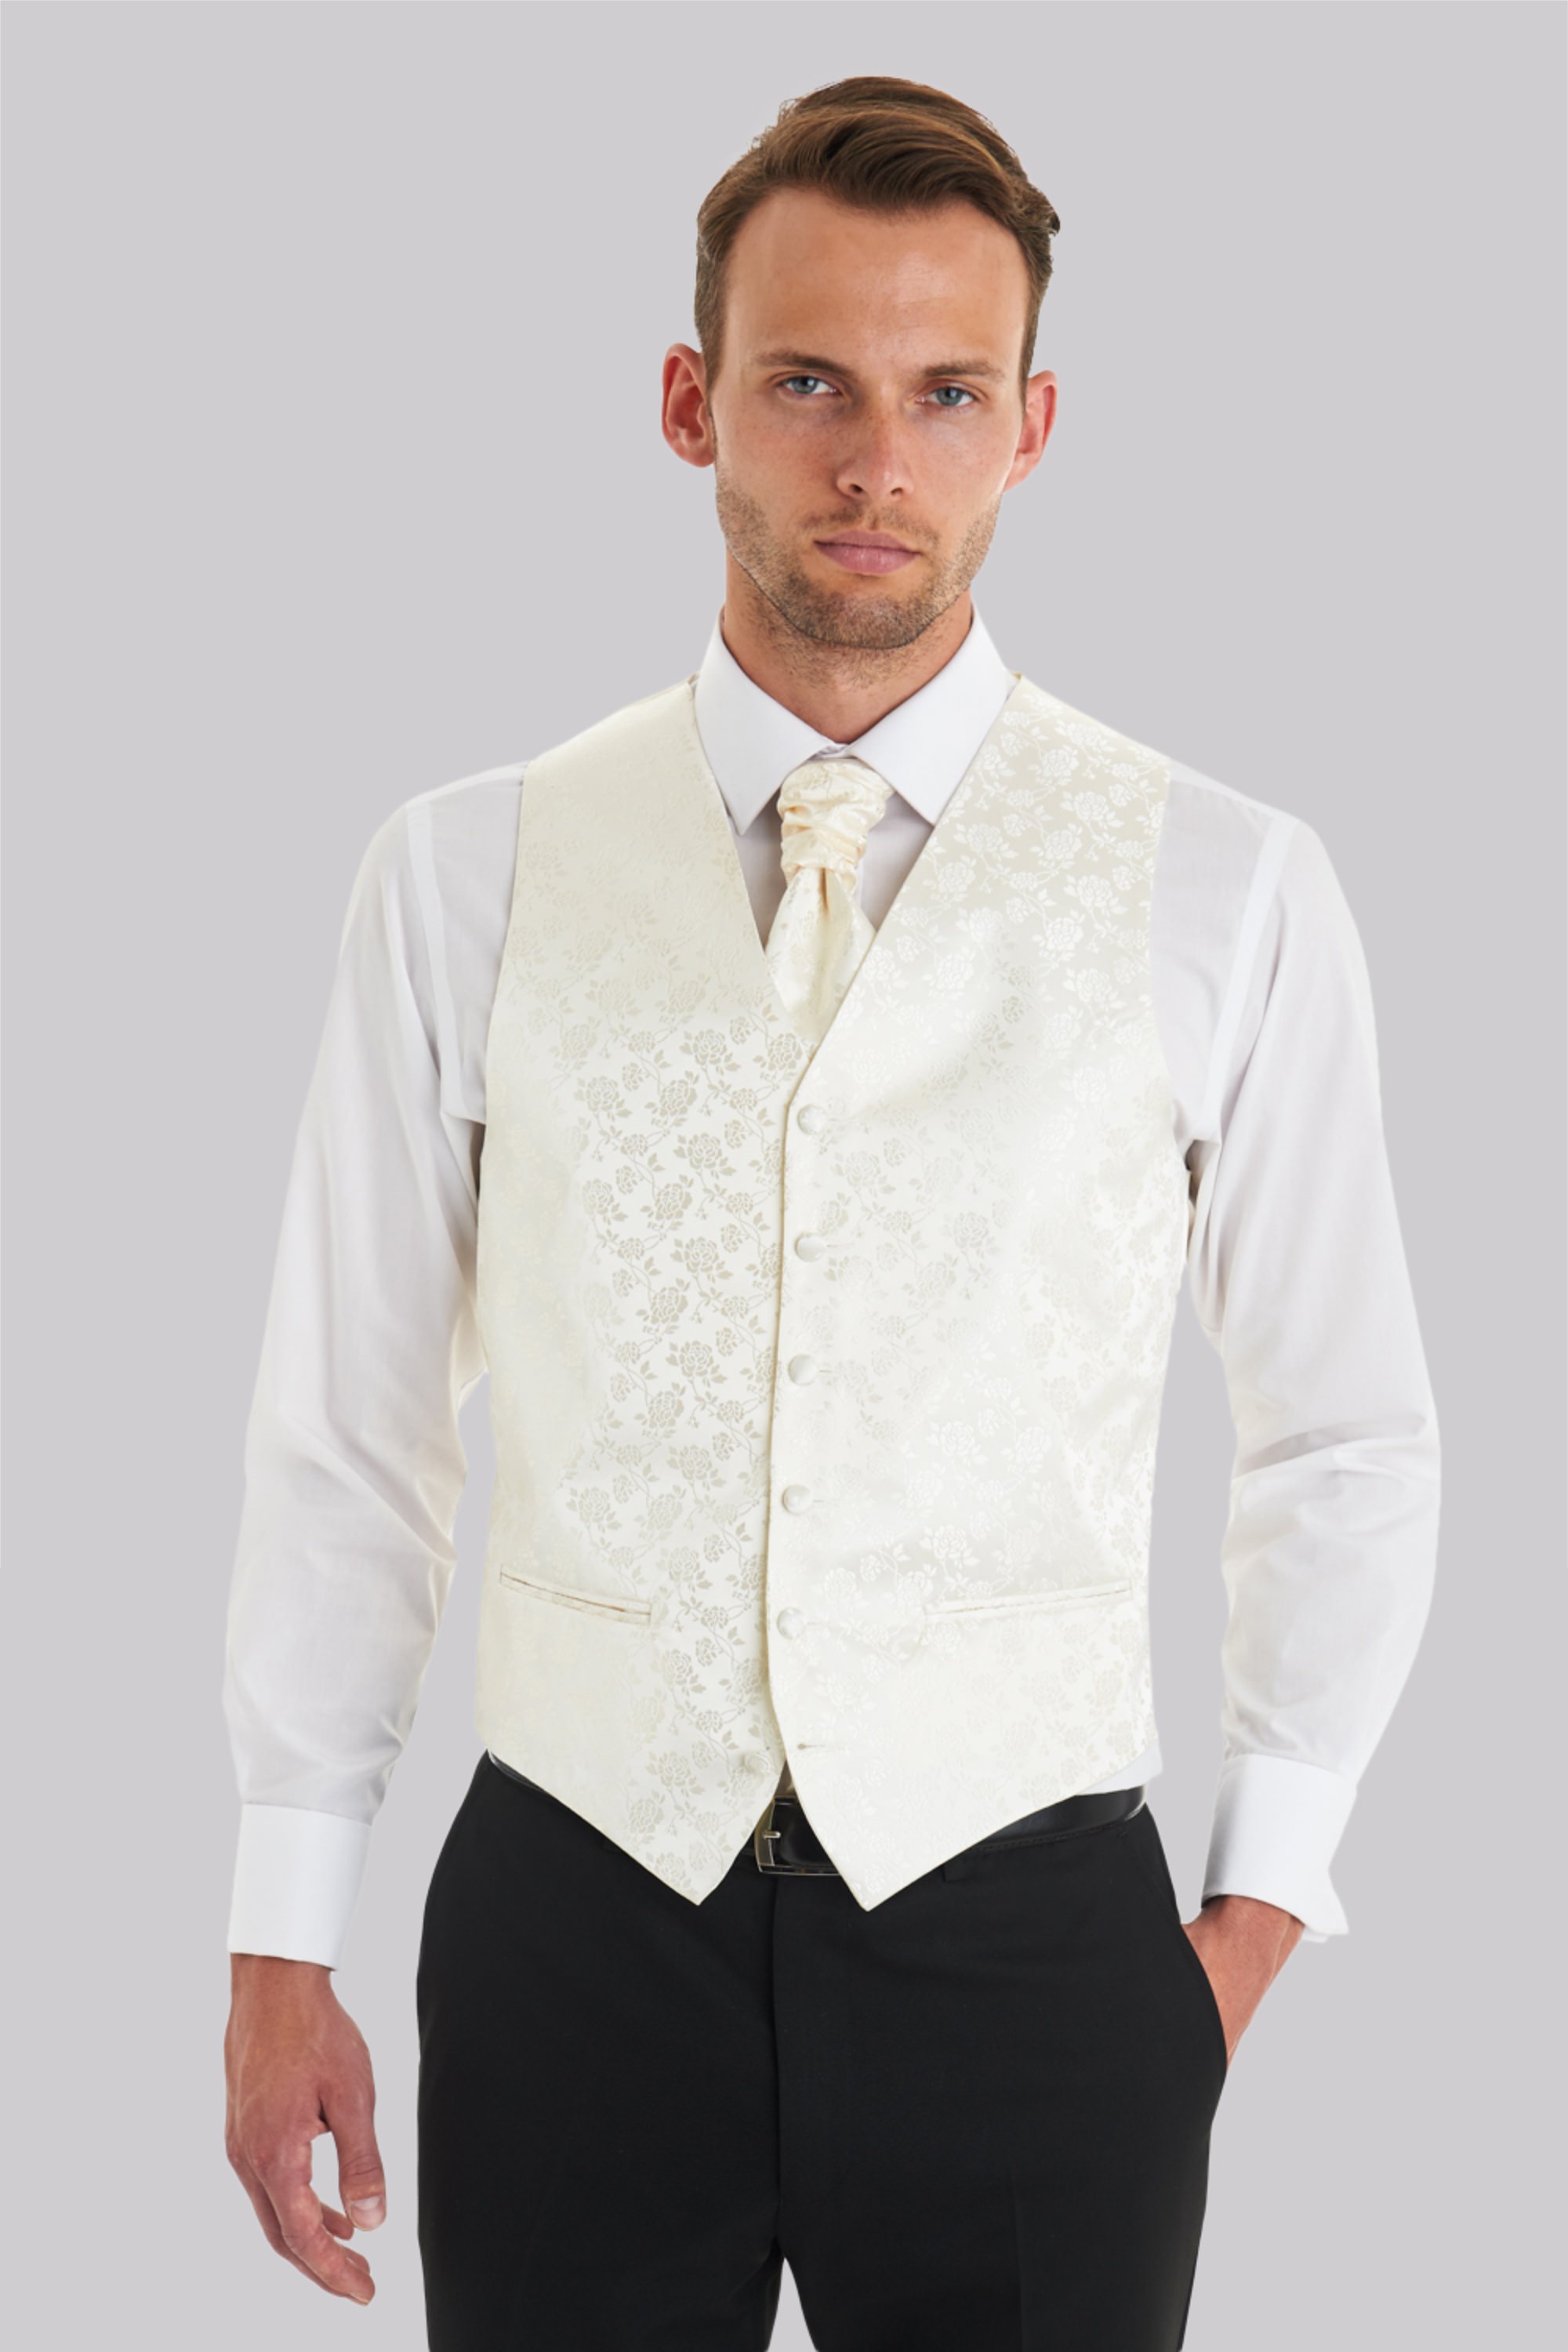 Wedding Waistcoat & Cravat Set Mens Woven Swirl Ivory Vest All Sizes by DQT 